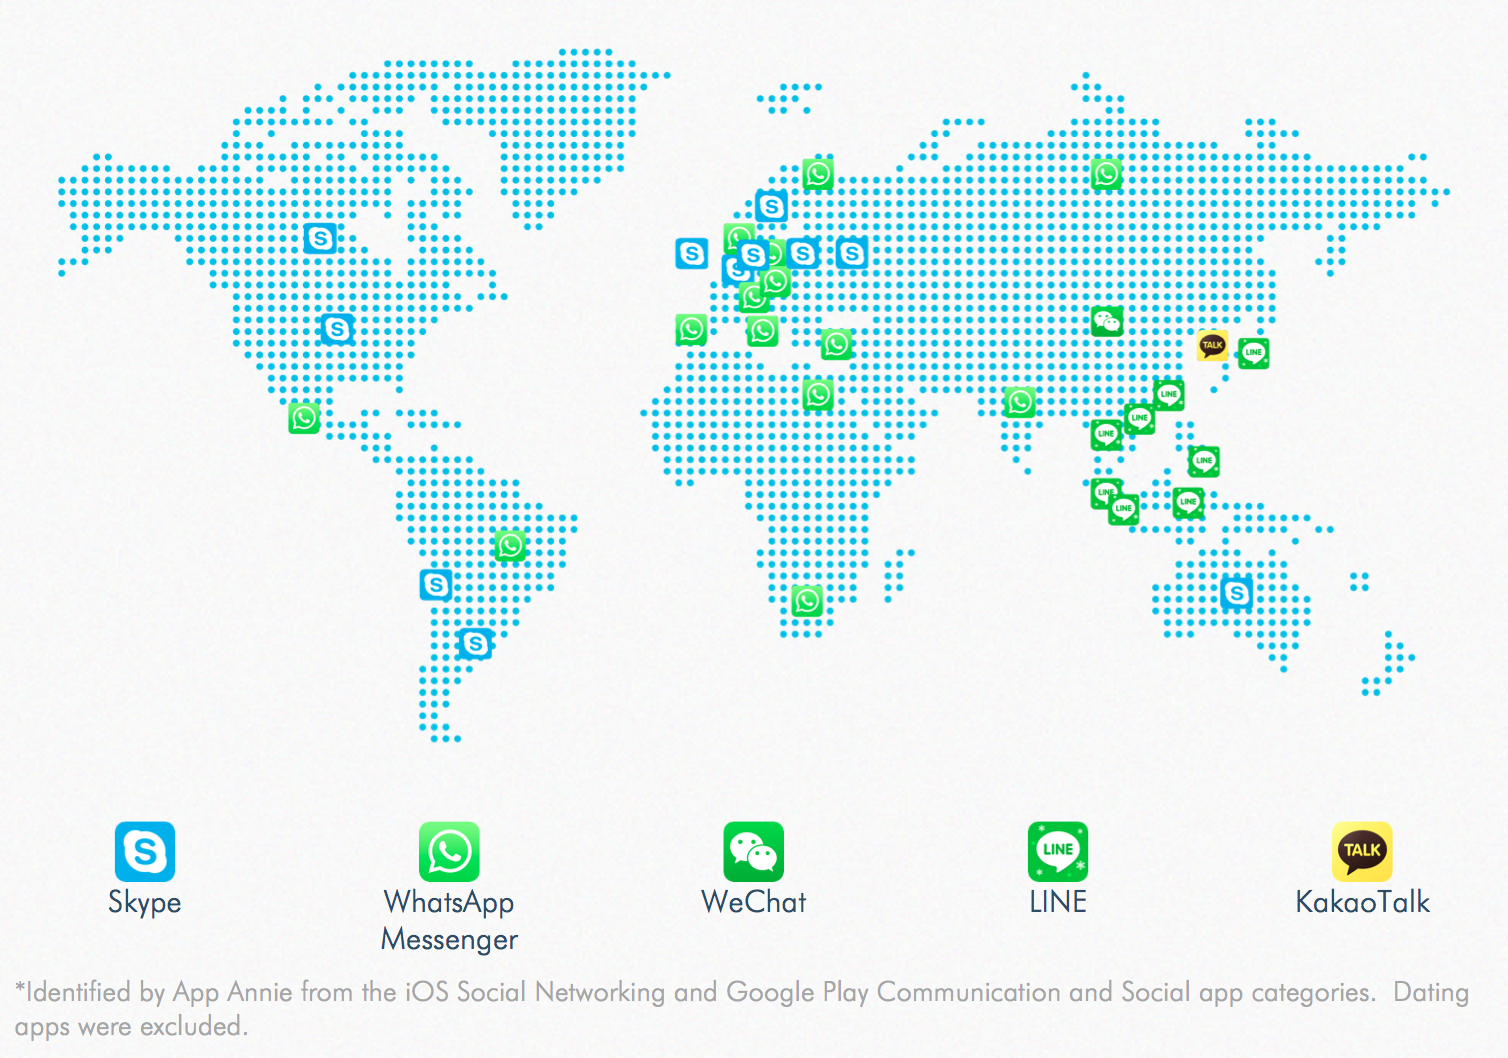 image04 - Messaging App Map